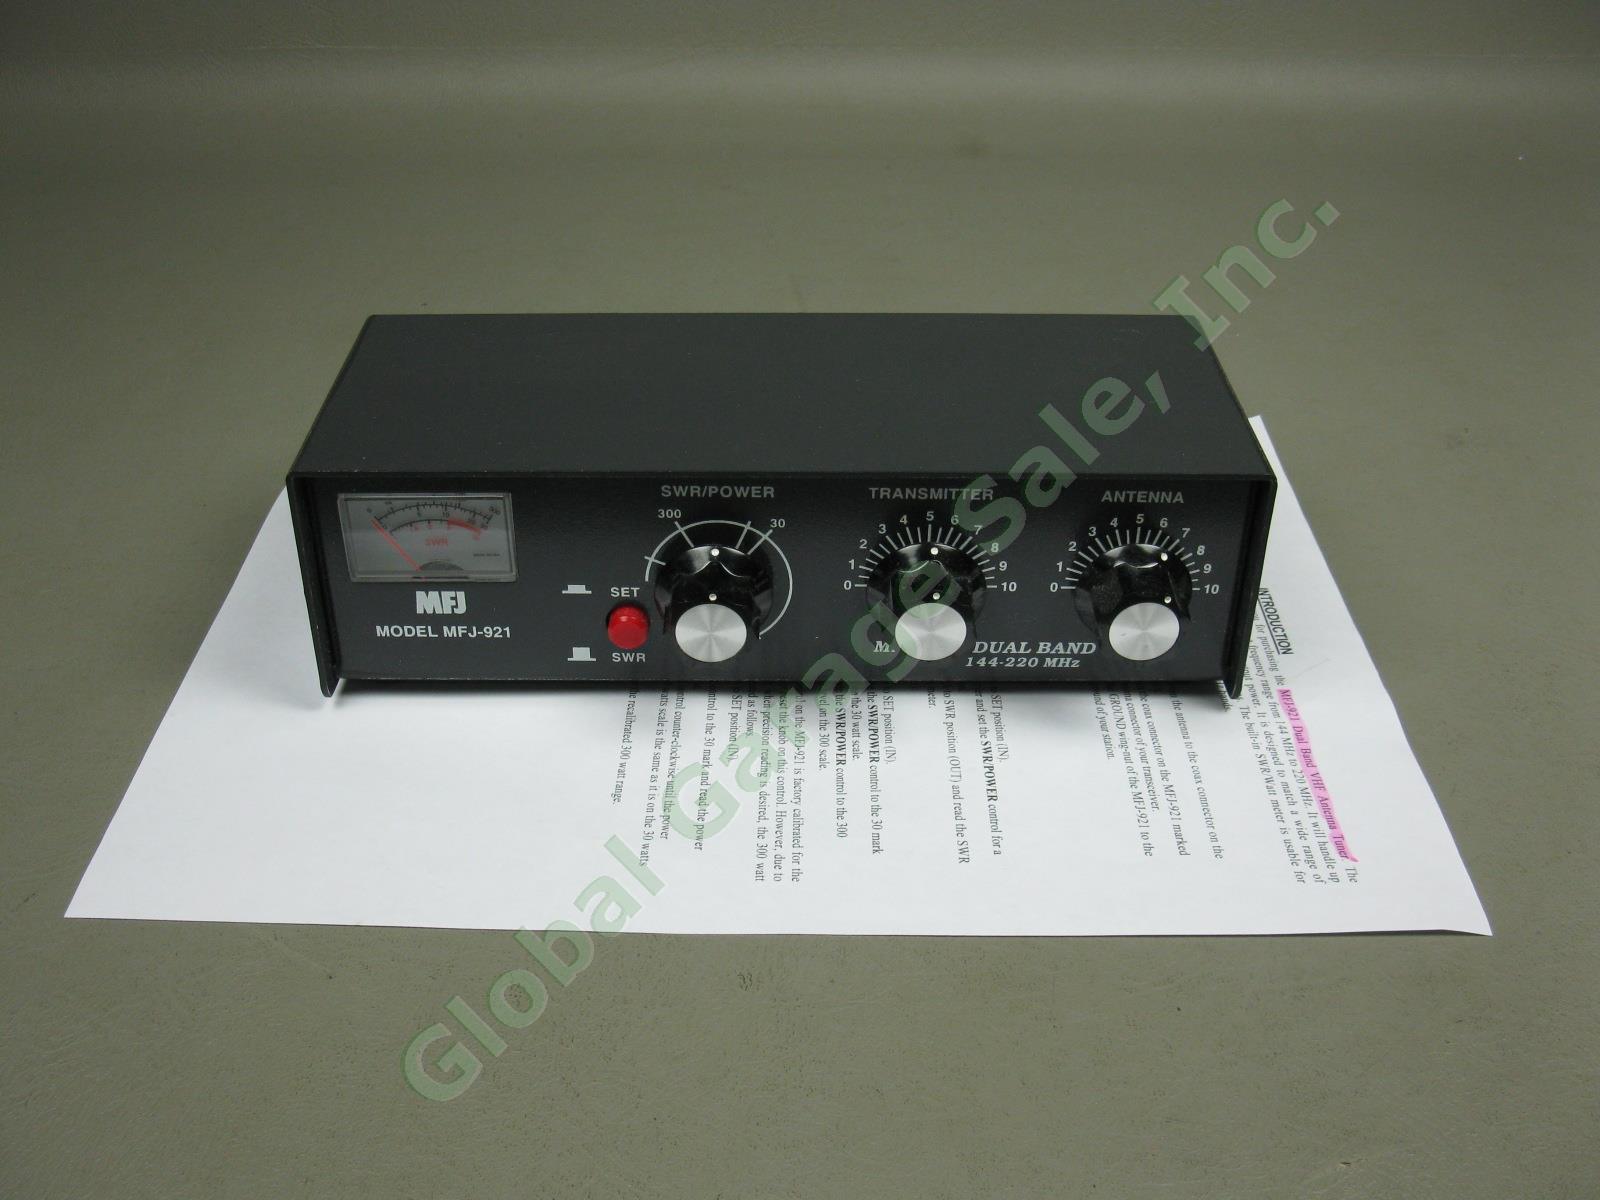 Black MFJ-921 VHF Dual Band Ham Radio Antenna Tuner 144-220MHz Tested Works + NR